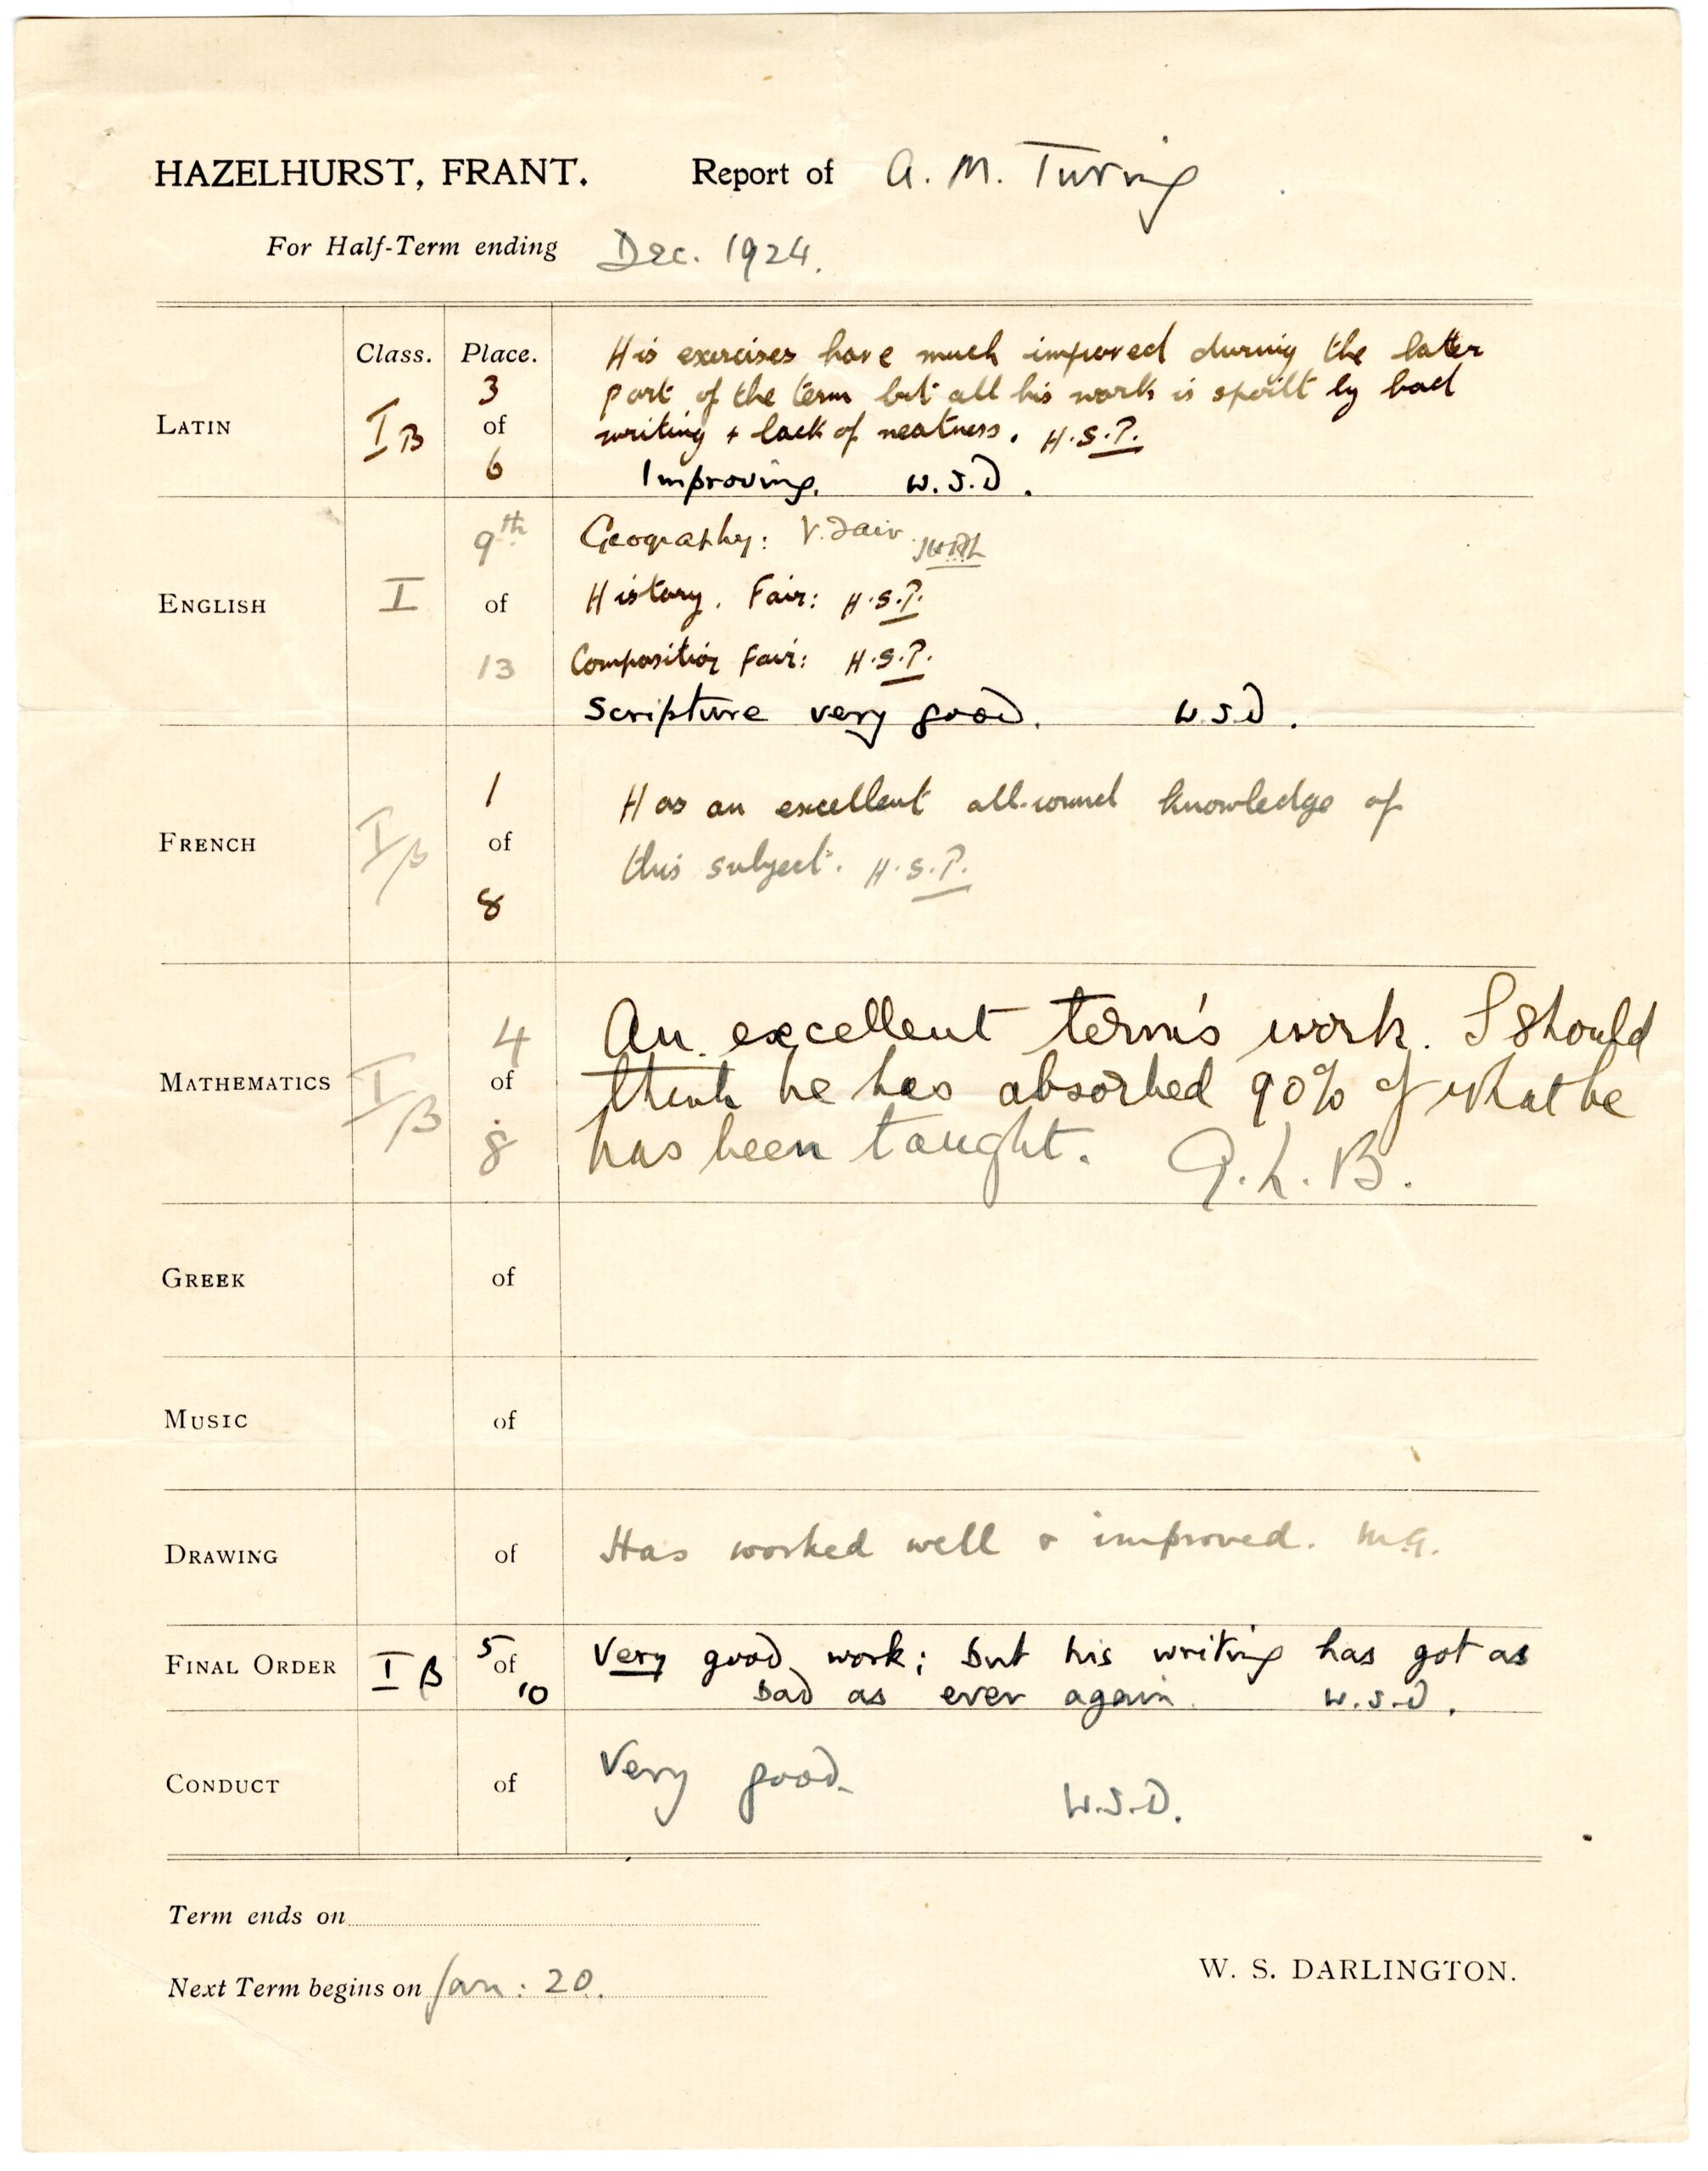 Alan Turing's half-term report from Hazlehurst Prep School from 1924. Picture: Sherborne School